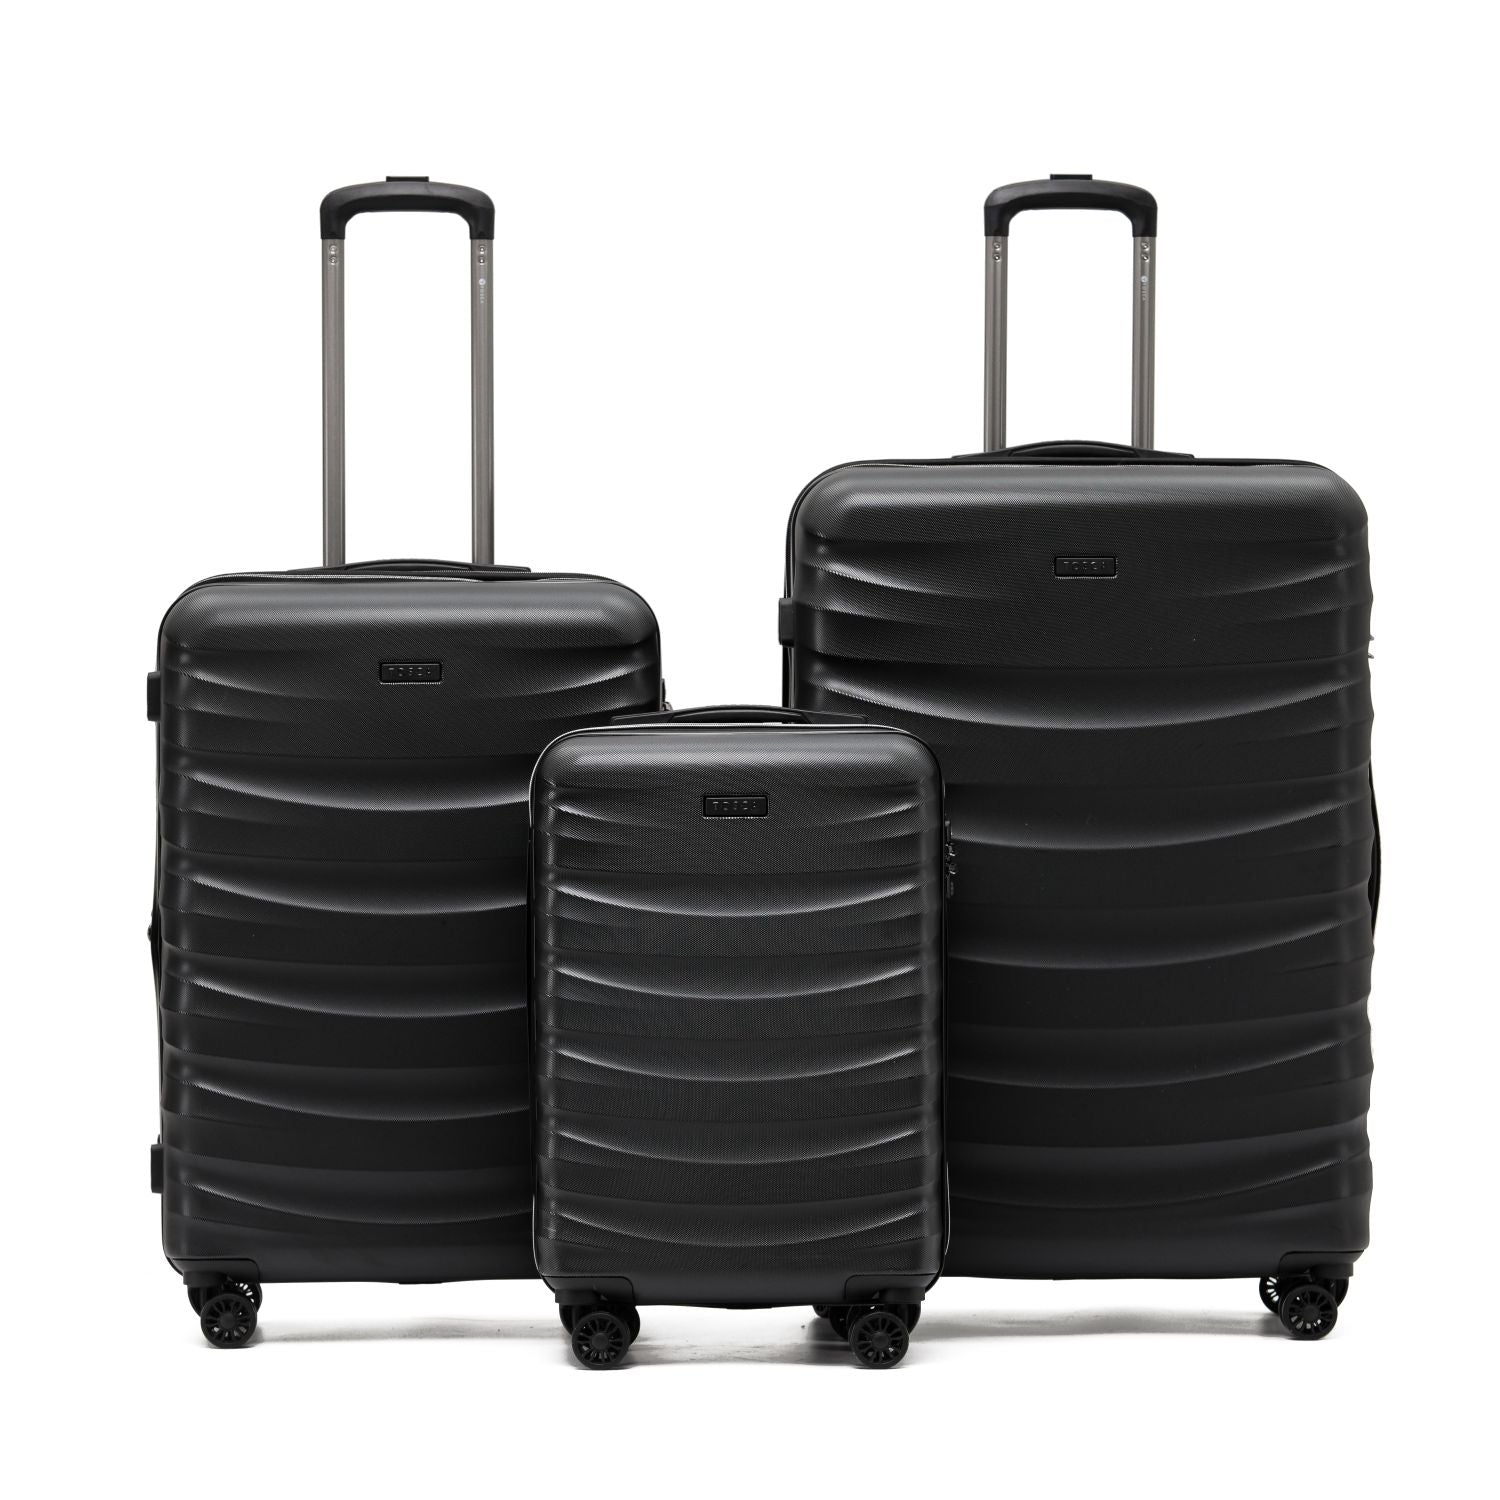 Tosca - Intersteller set of 3 suitcases - Black-2